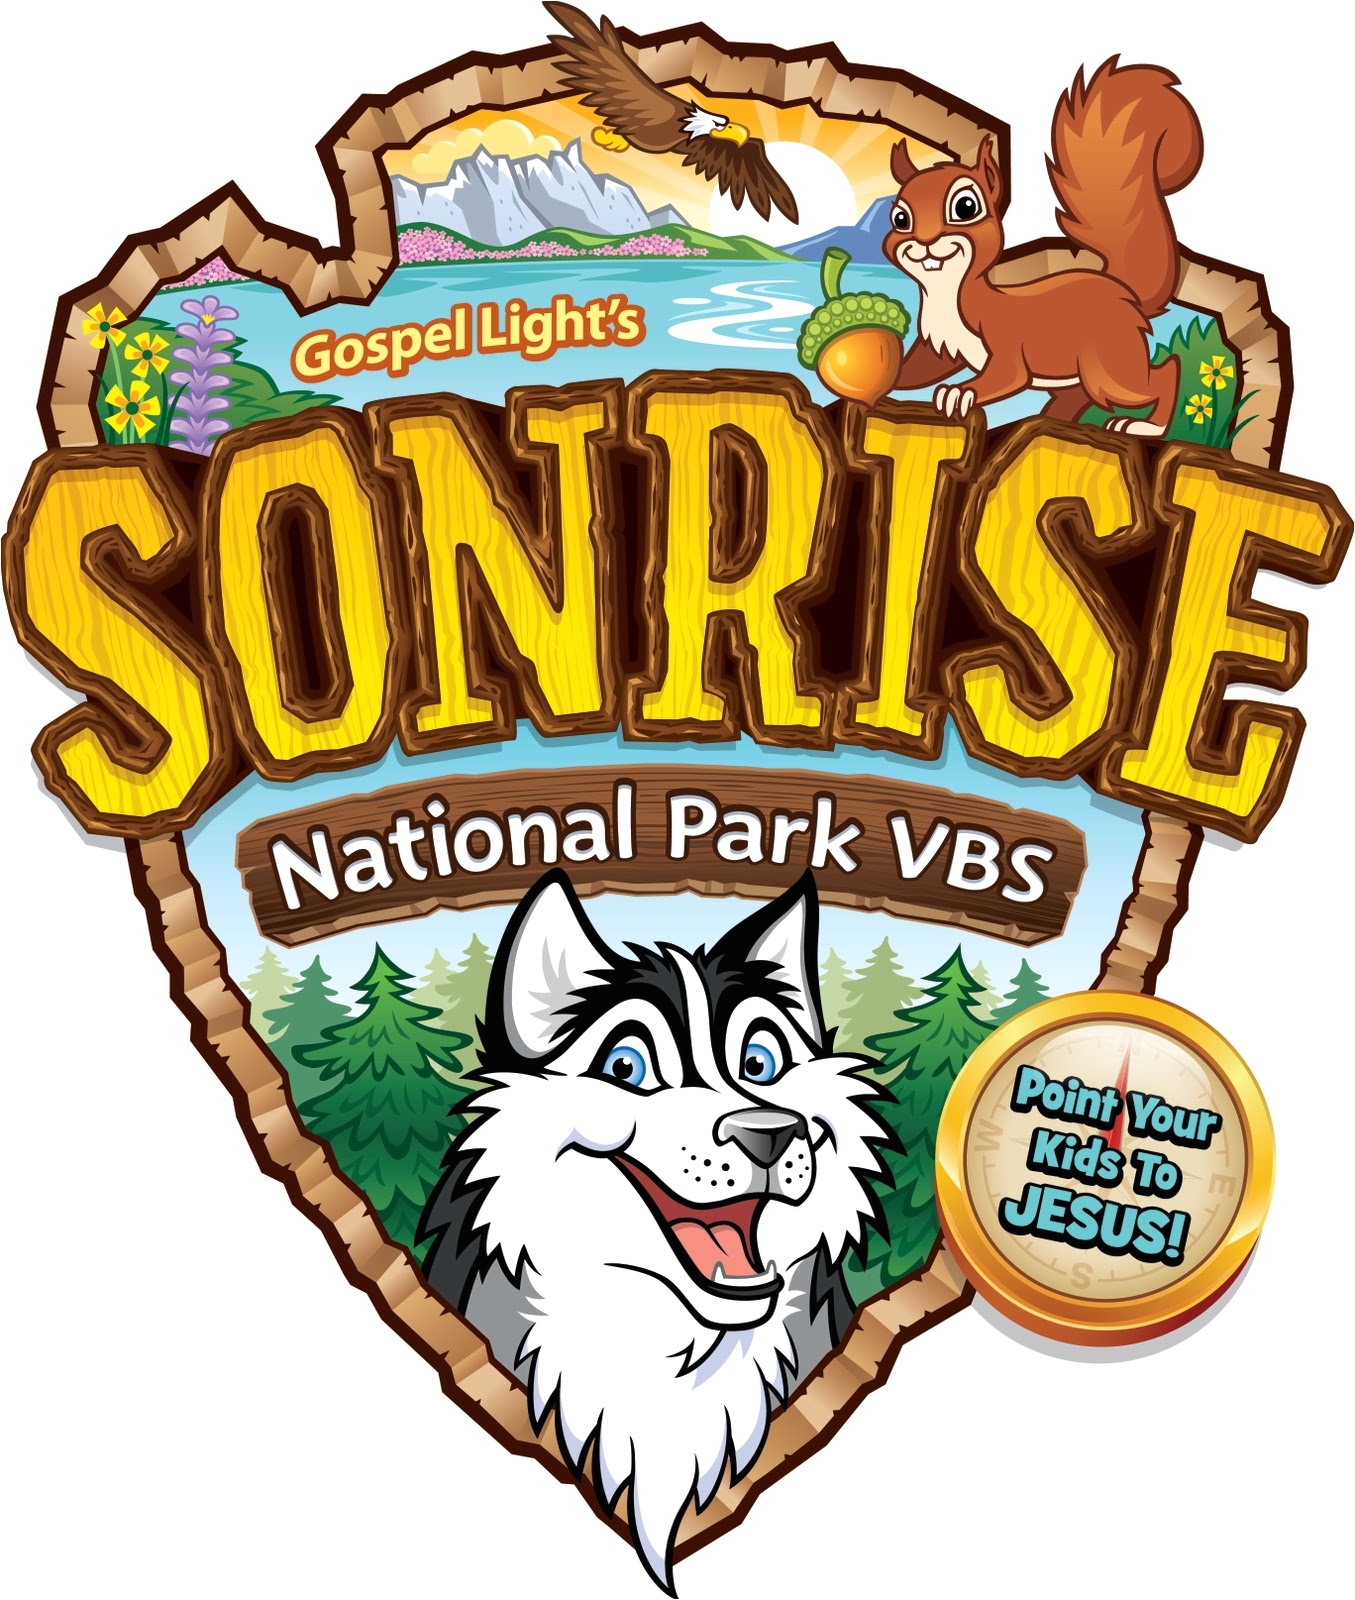 gospel lights vbs sneak preview sonrise national park